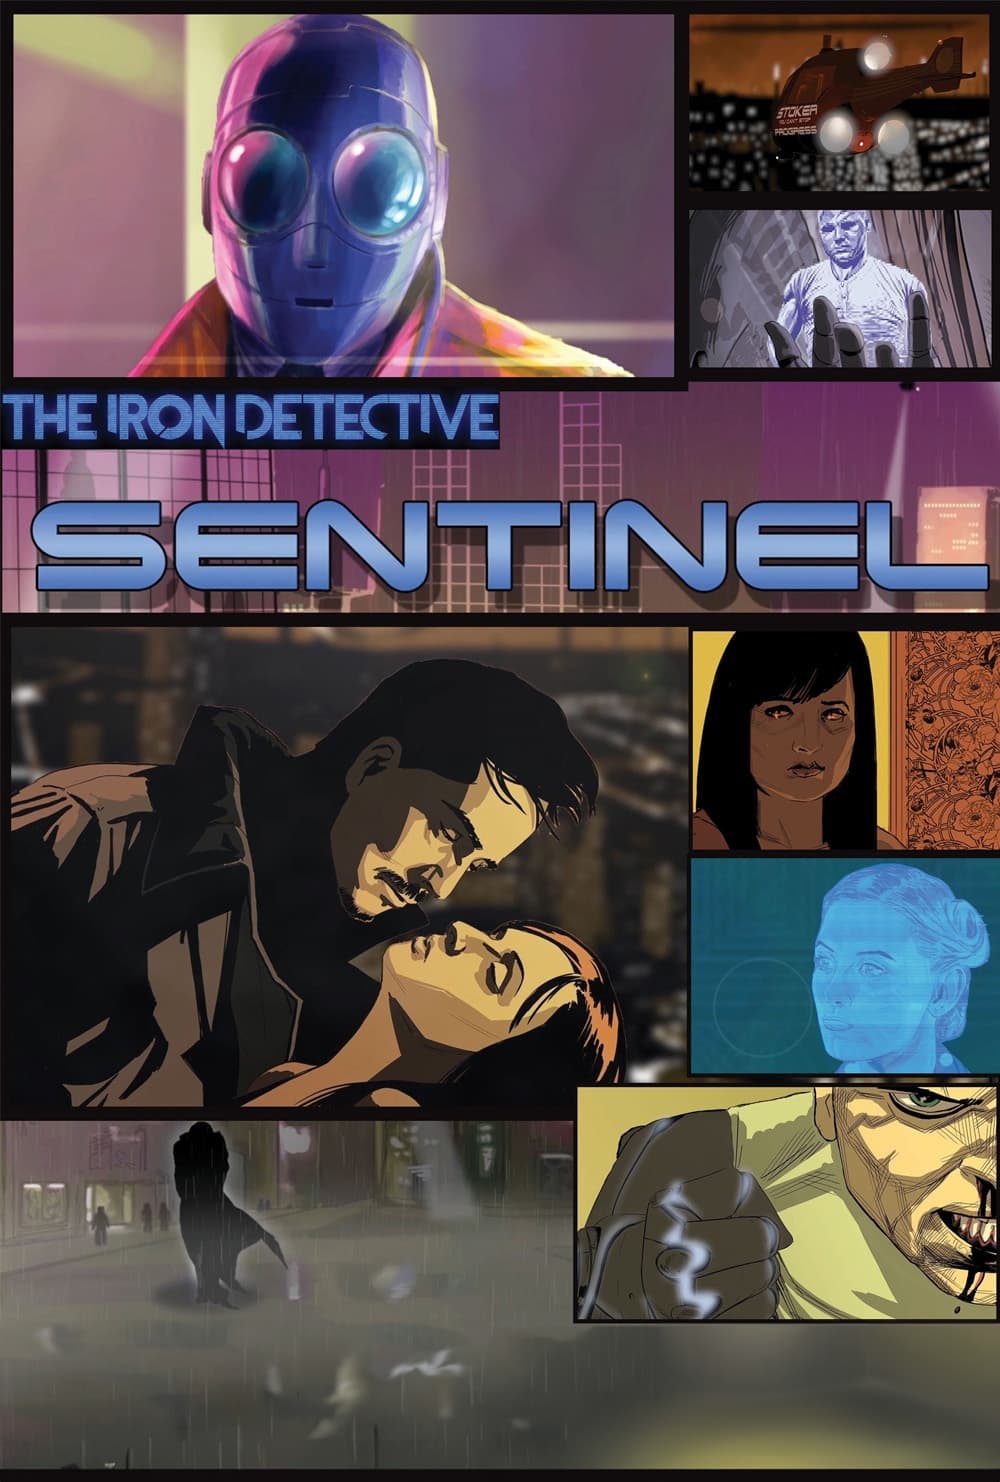 The Iron Detective: Sentinel